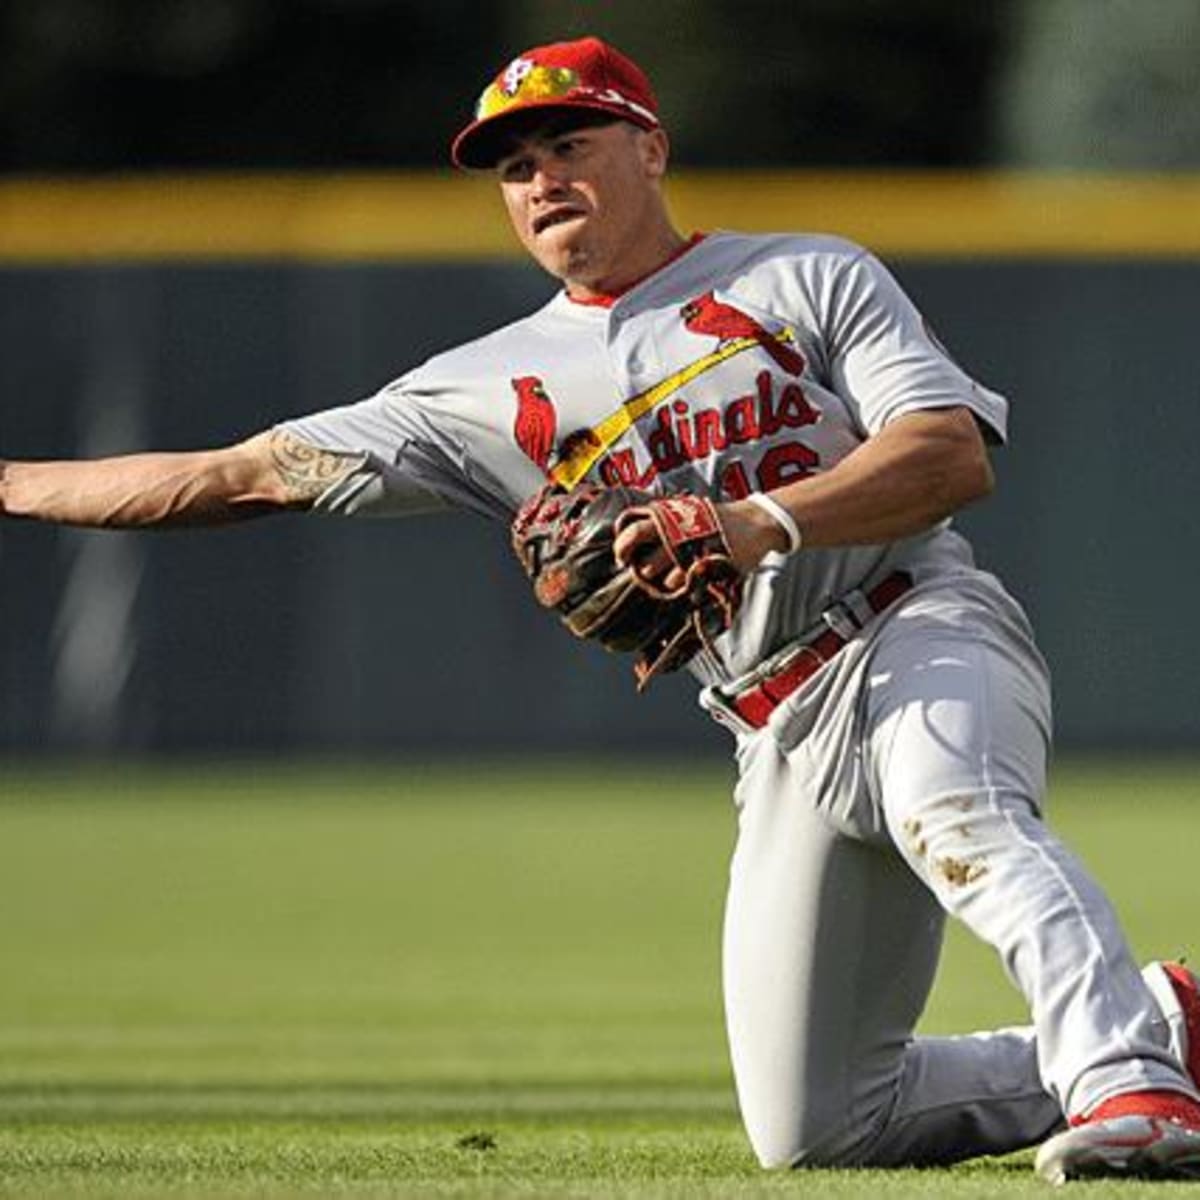 Prospect of the Day: Kolten Wong, 2B, St. Louis Cardinals - Minor